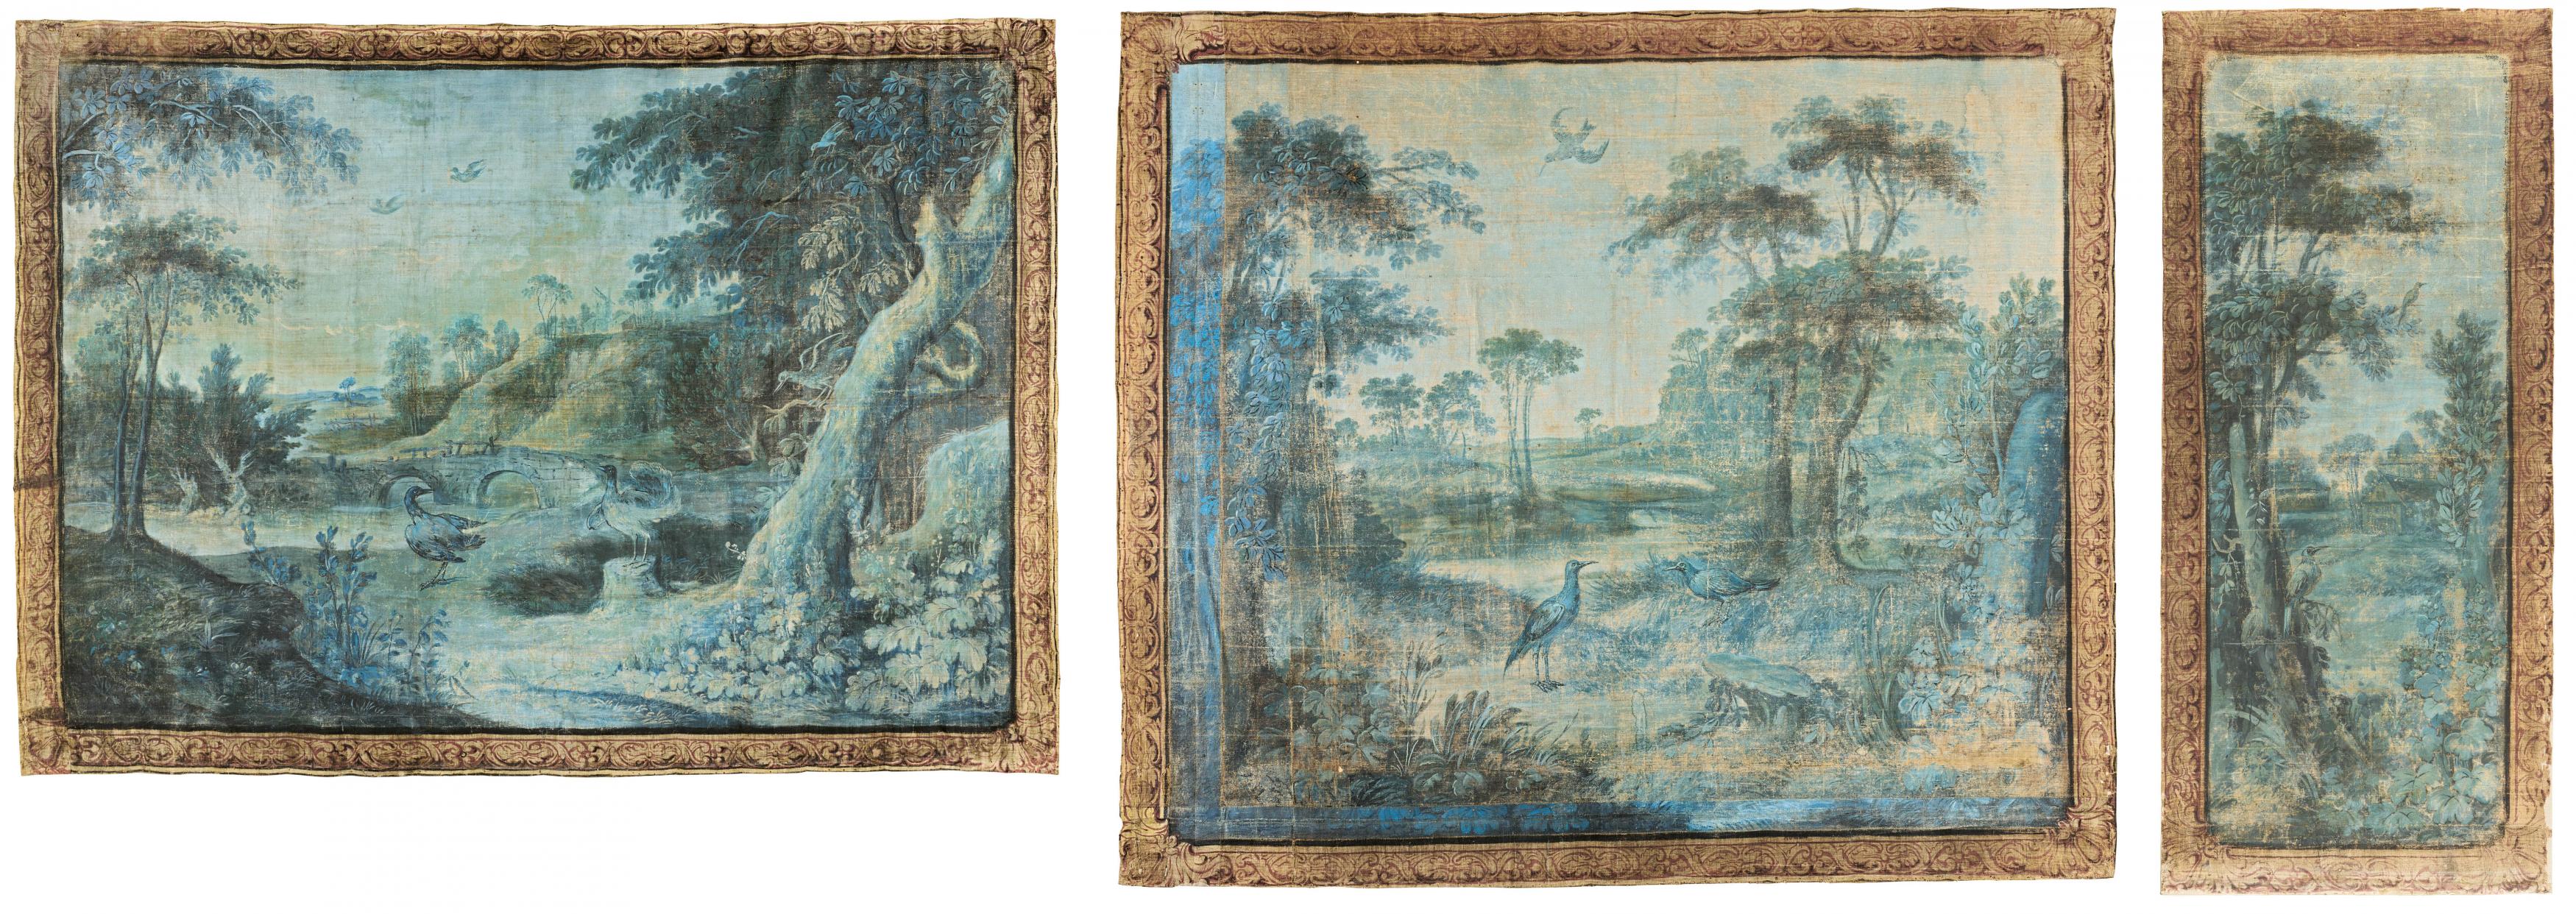 Set of three verdure tapestries with landscape vedutas - Image 2 of 6